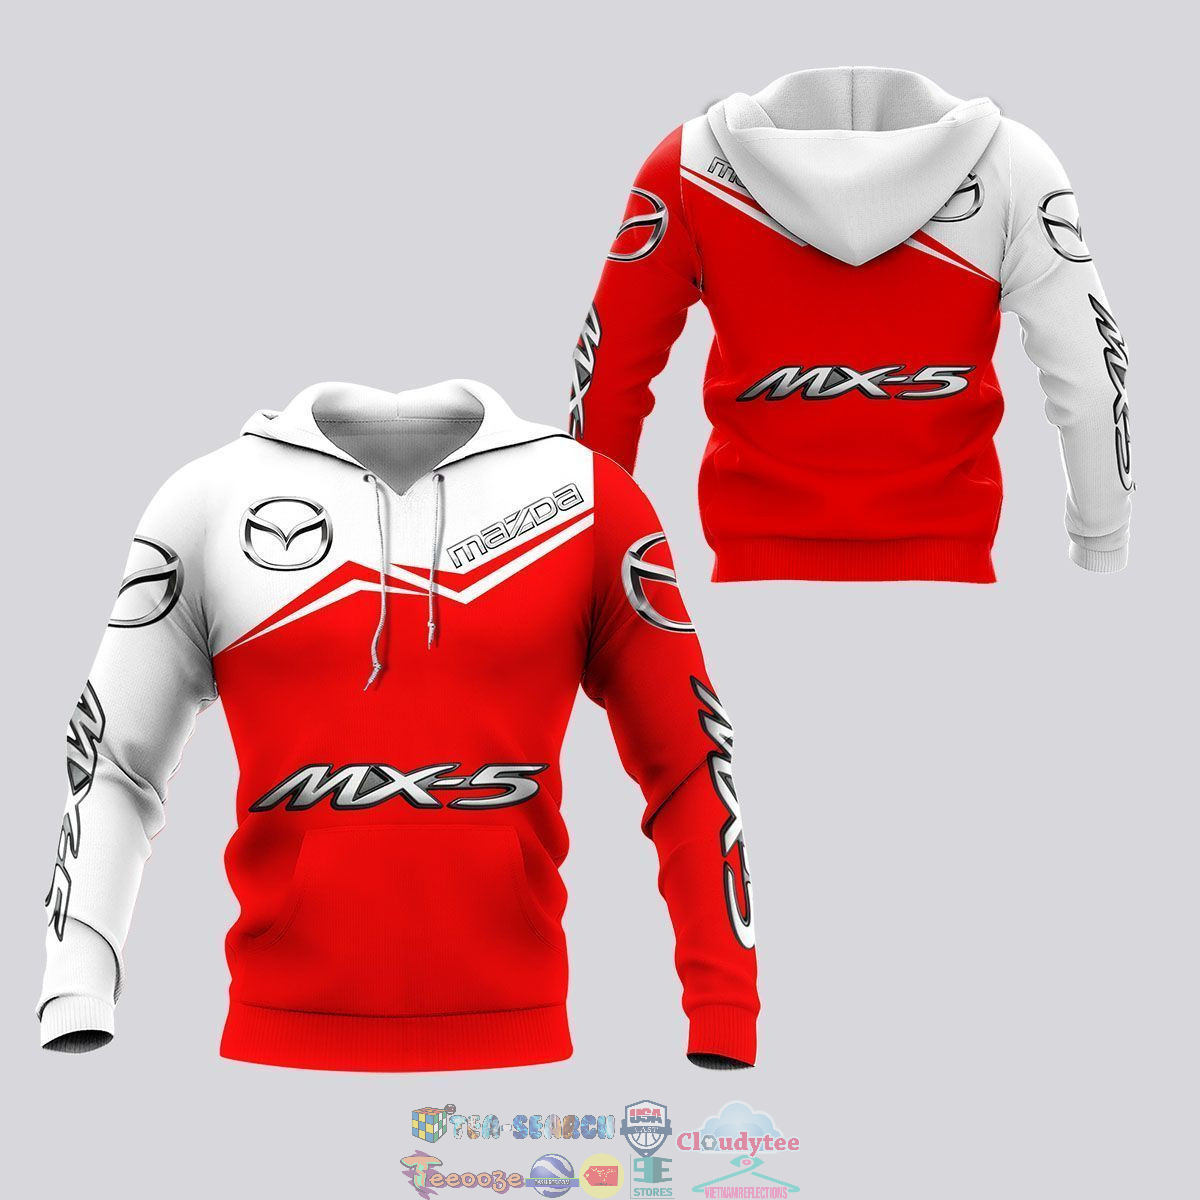 Mazda MX-5 ver 3 3D hoodie and t-shirt – Saleoff